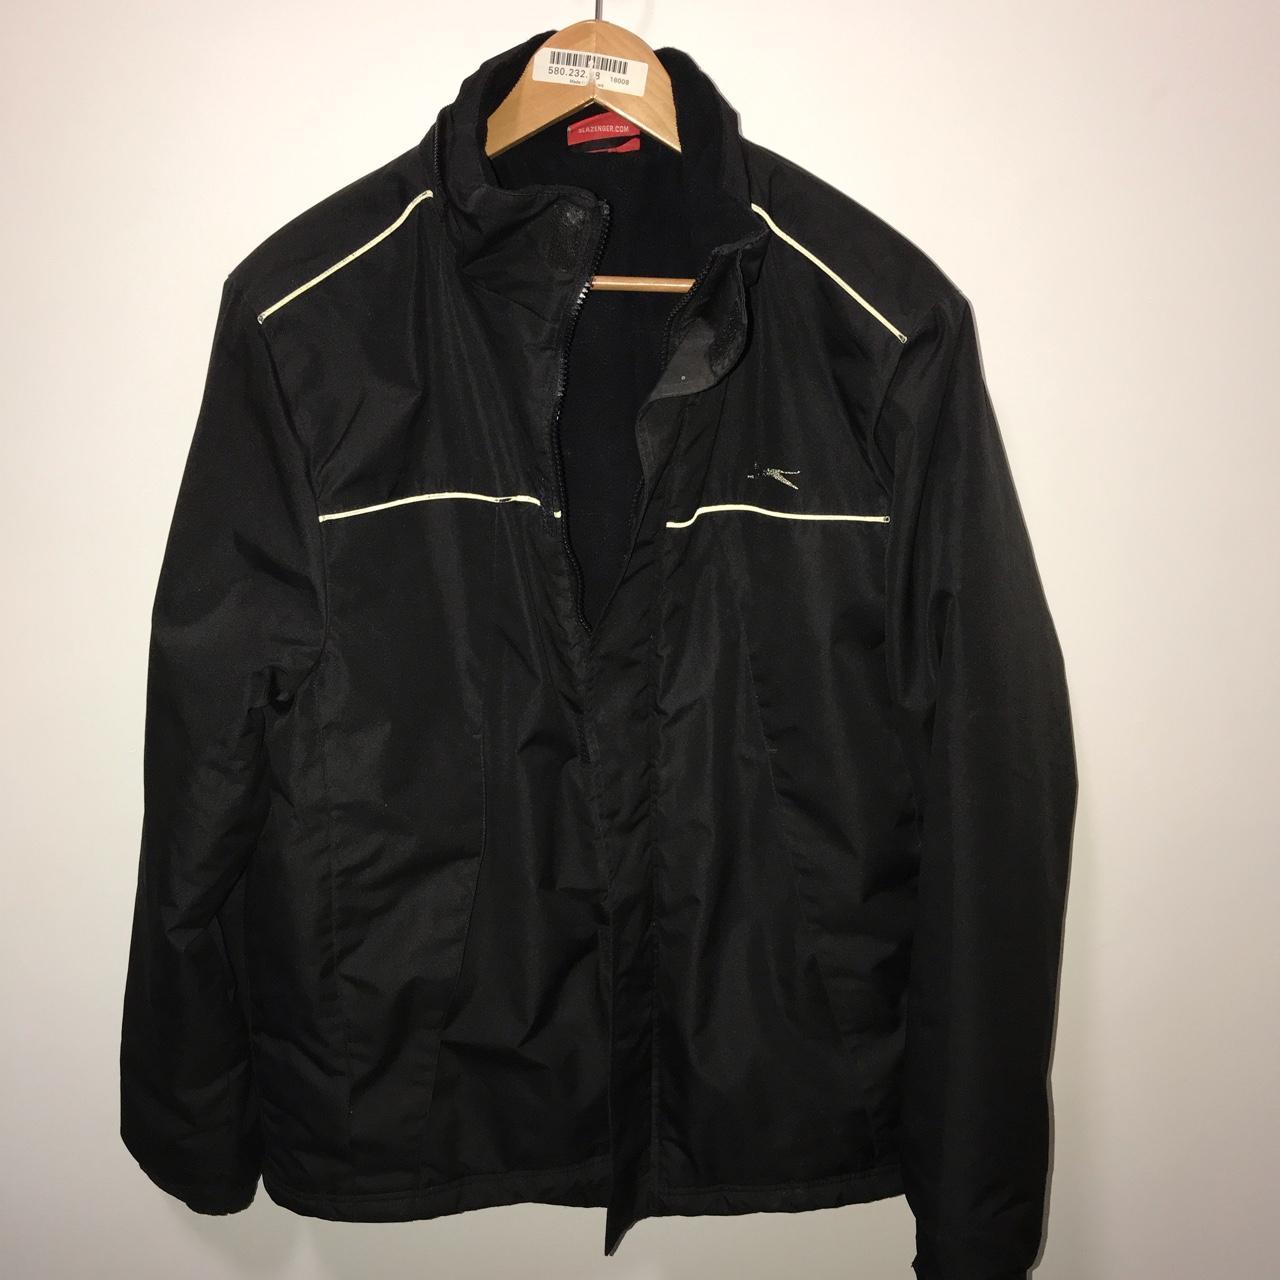 slazenger coat/jacket great condition - 9/10 size -... - Depop